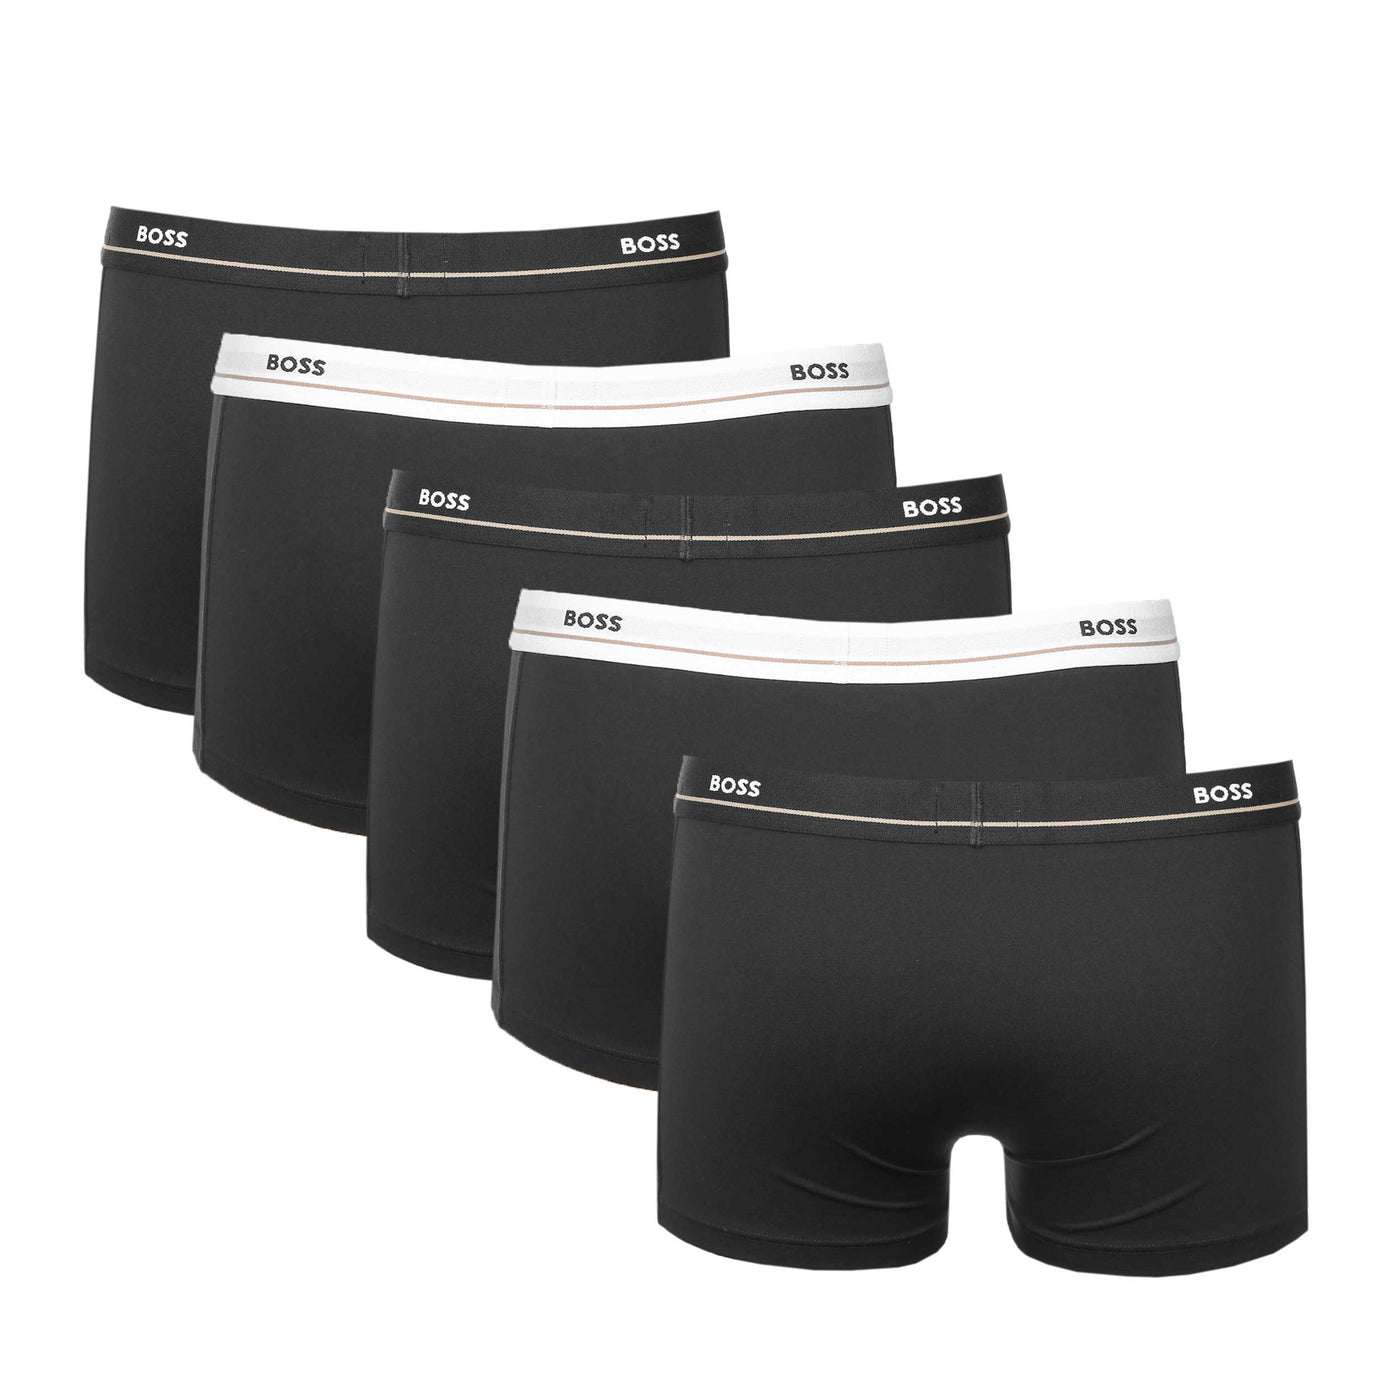 BOSS Trunk 5P Essential Underwear in Black Back